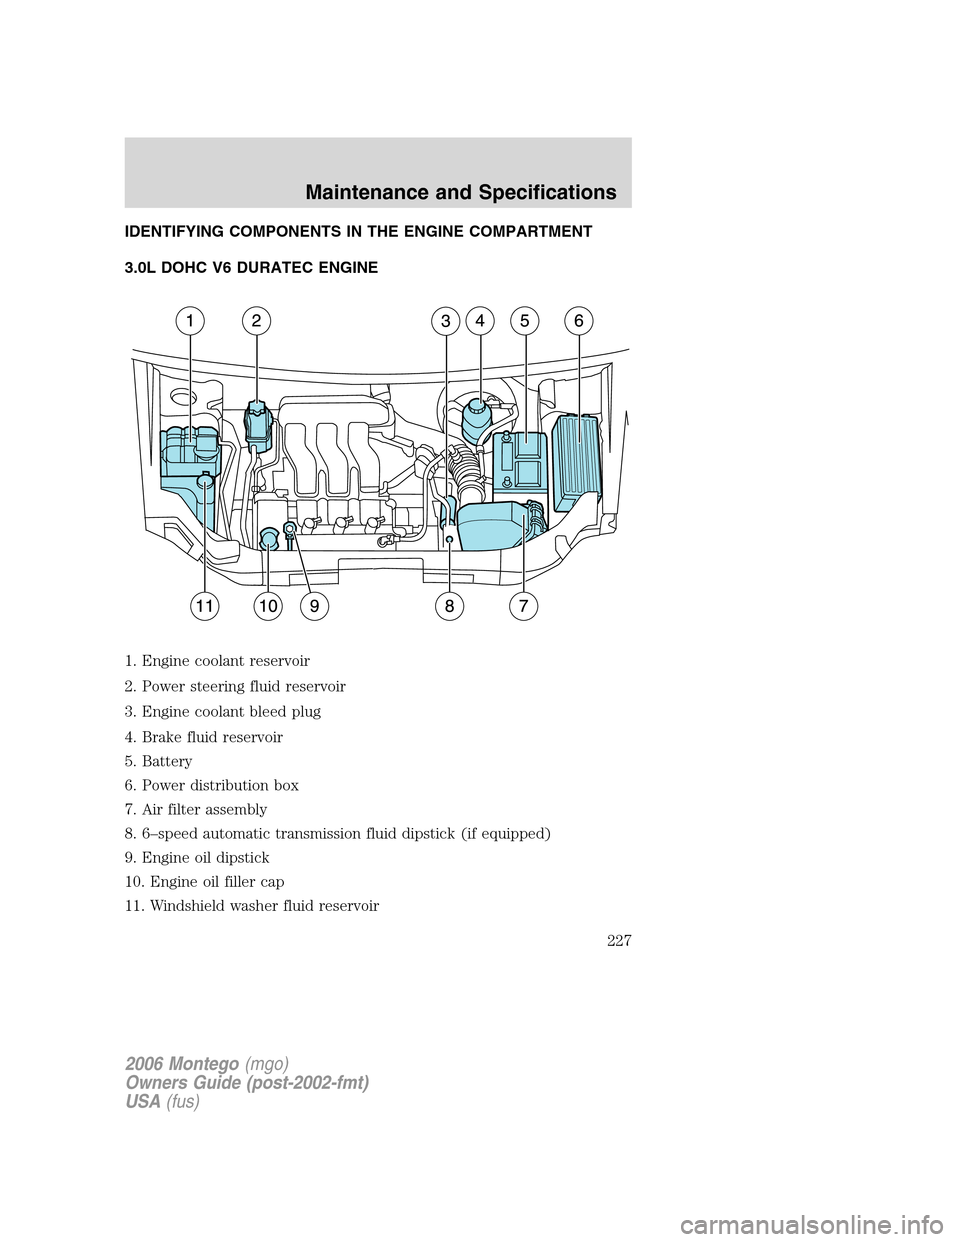 Mercury Montego 2006  Owners Manuals IDENTIFYING COMPONENTS IN THE ENGINE COMPARTMENT
3.0L DOHC V6 DURATEC ENGINE
1. Engine coolant reservoir
2. Power steering fluid reservoir
3. Engine coolant bleed plug
4. Brake fluid reservoir
5. Batt